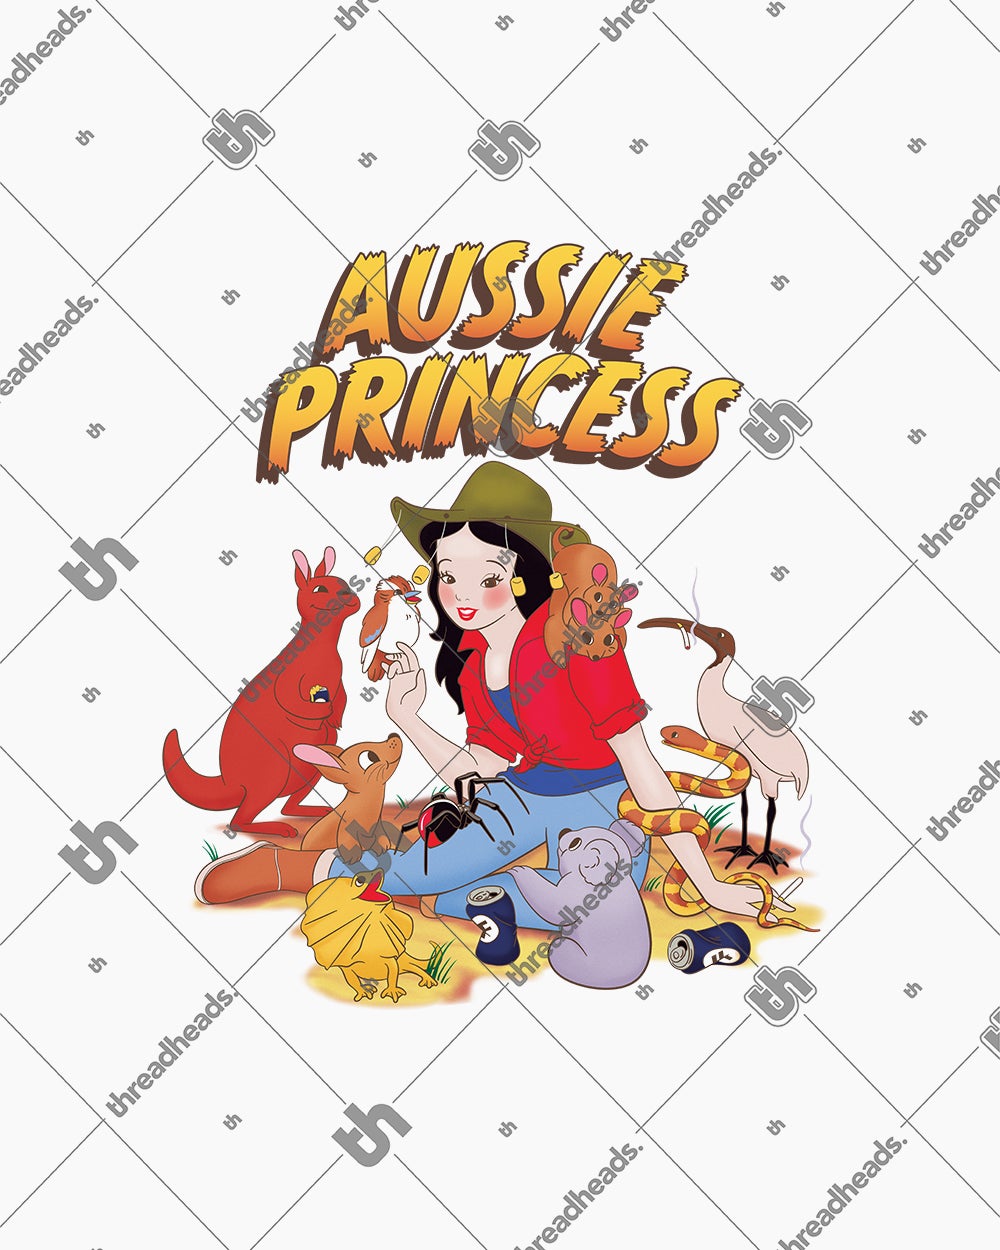 Aussie Princess T-Shirt Australia Online #colour_white